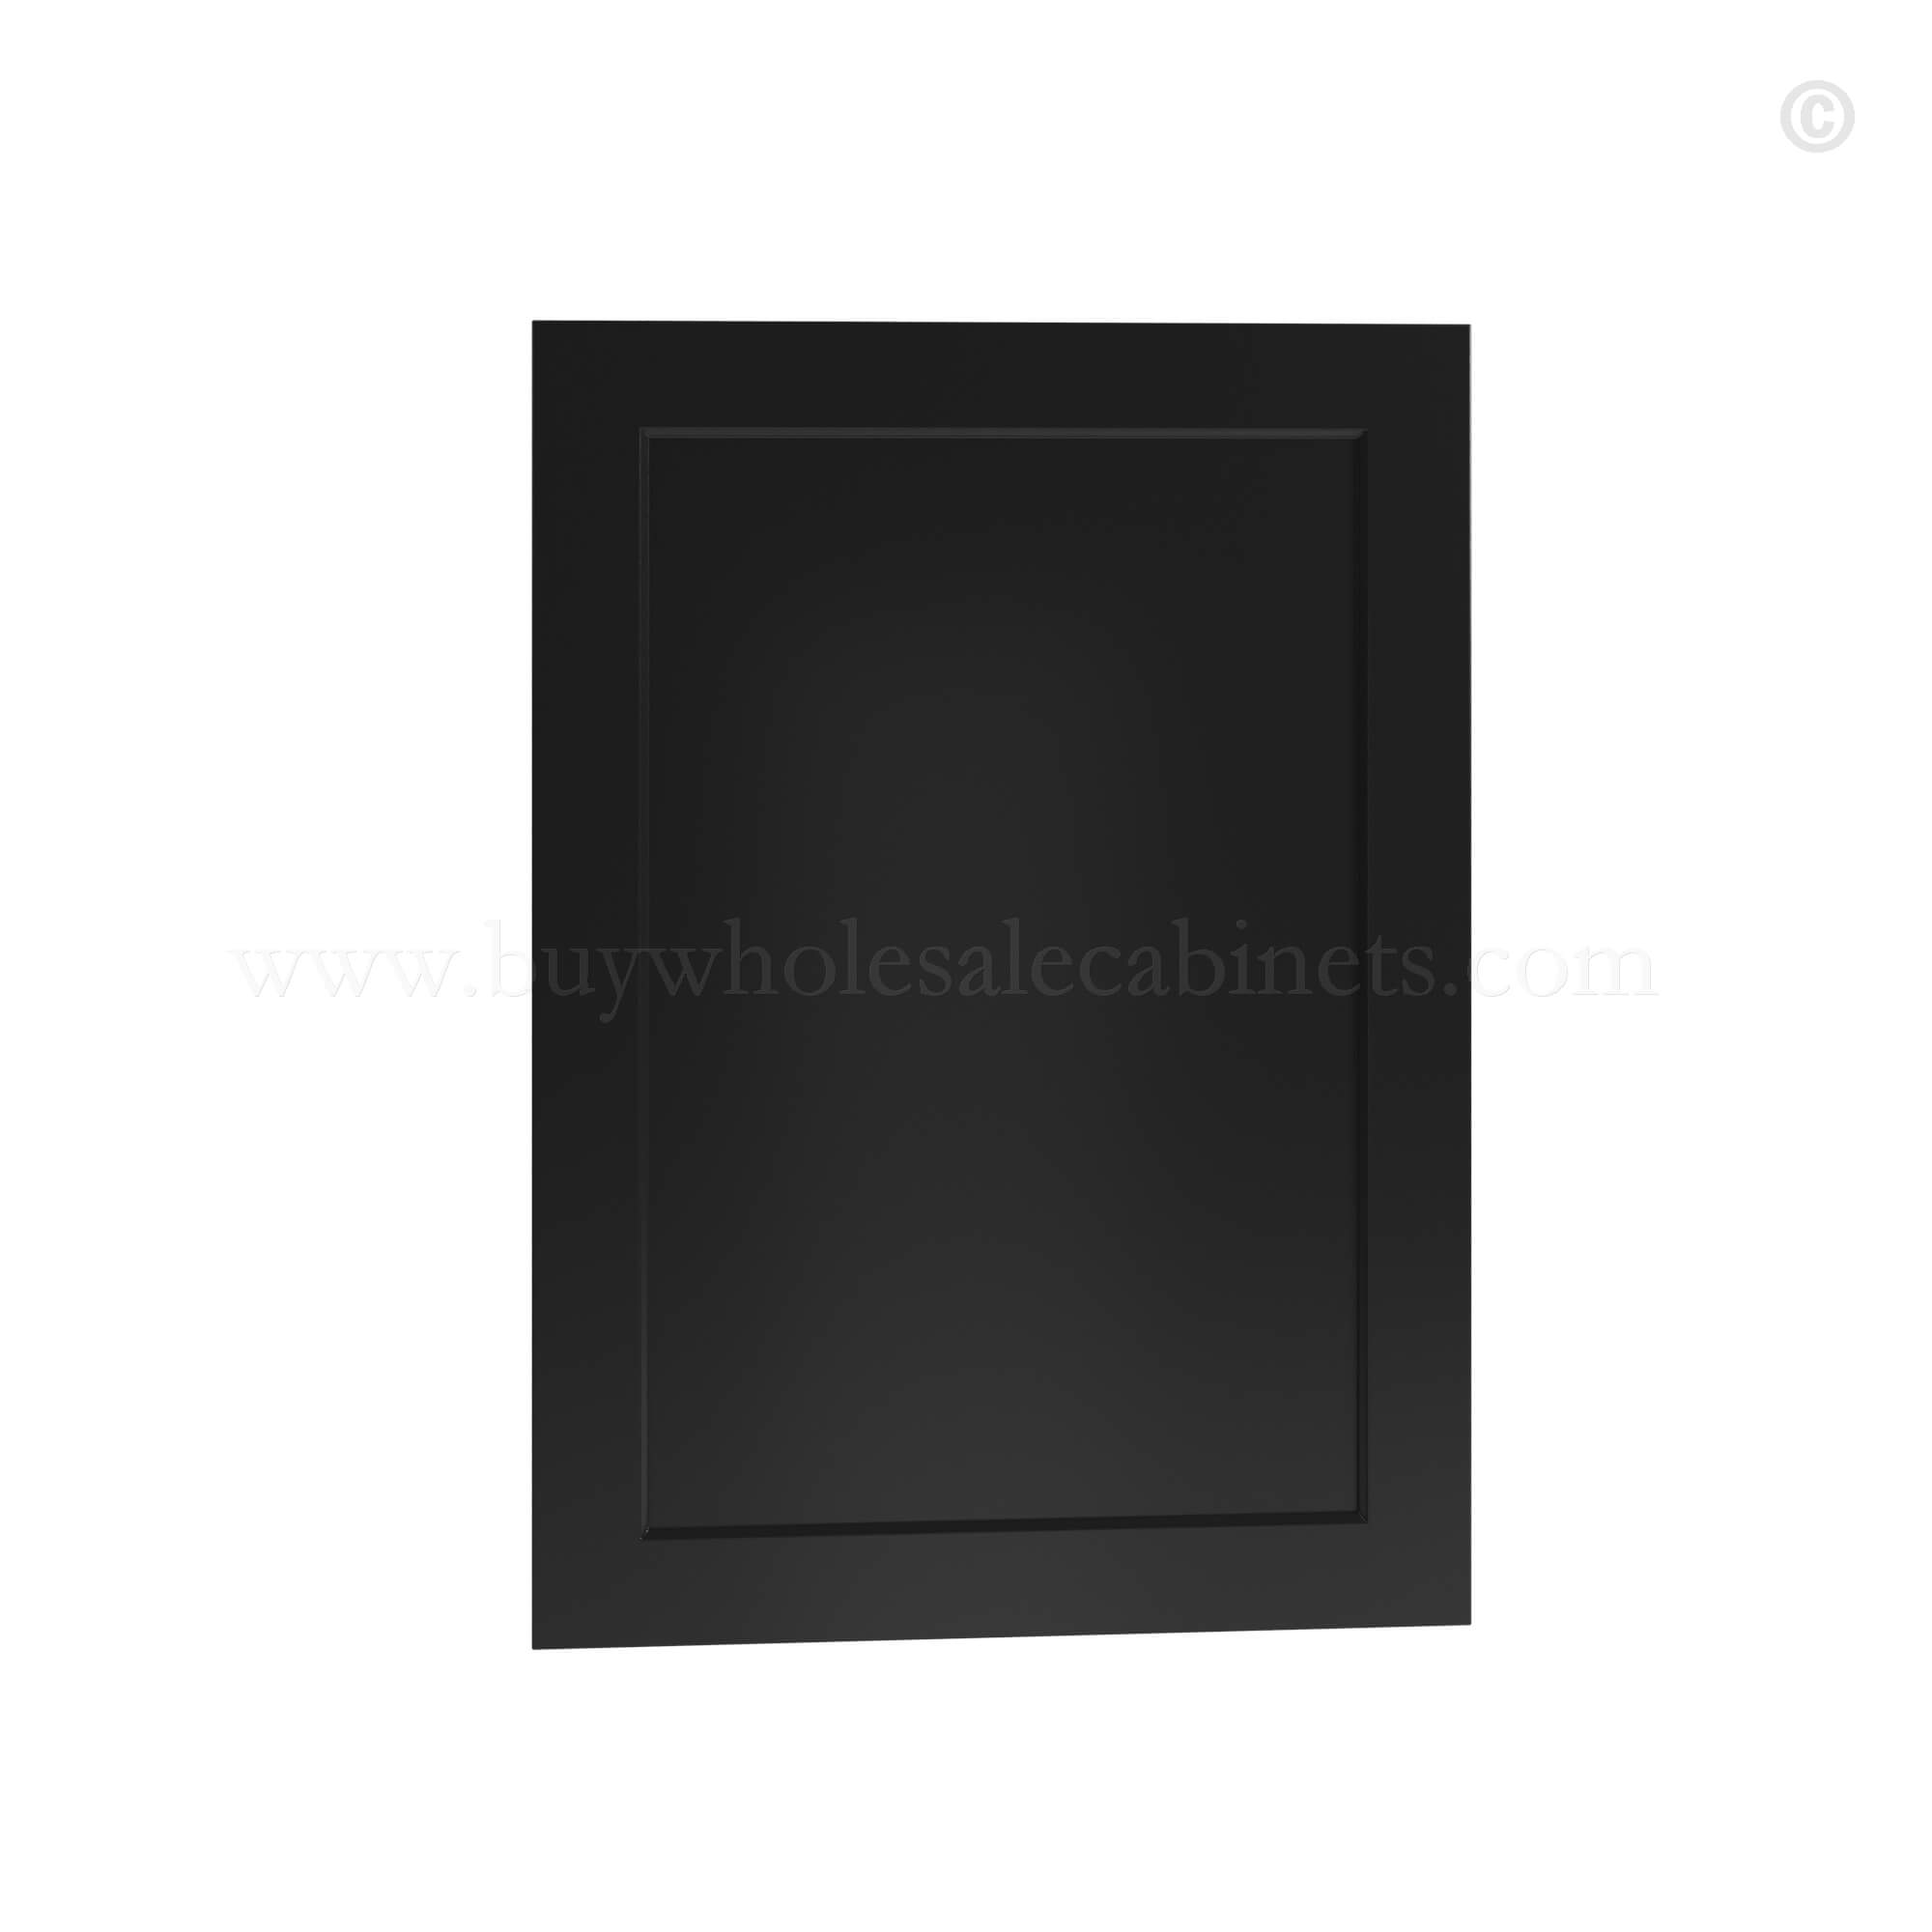 Black Shaker Sample Door, rta cabinets, wholesale cabinets